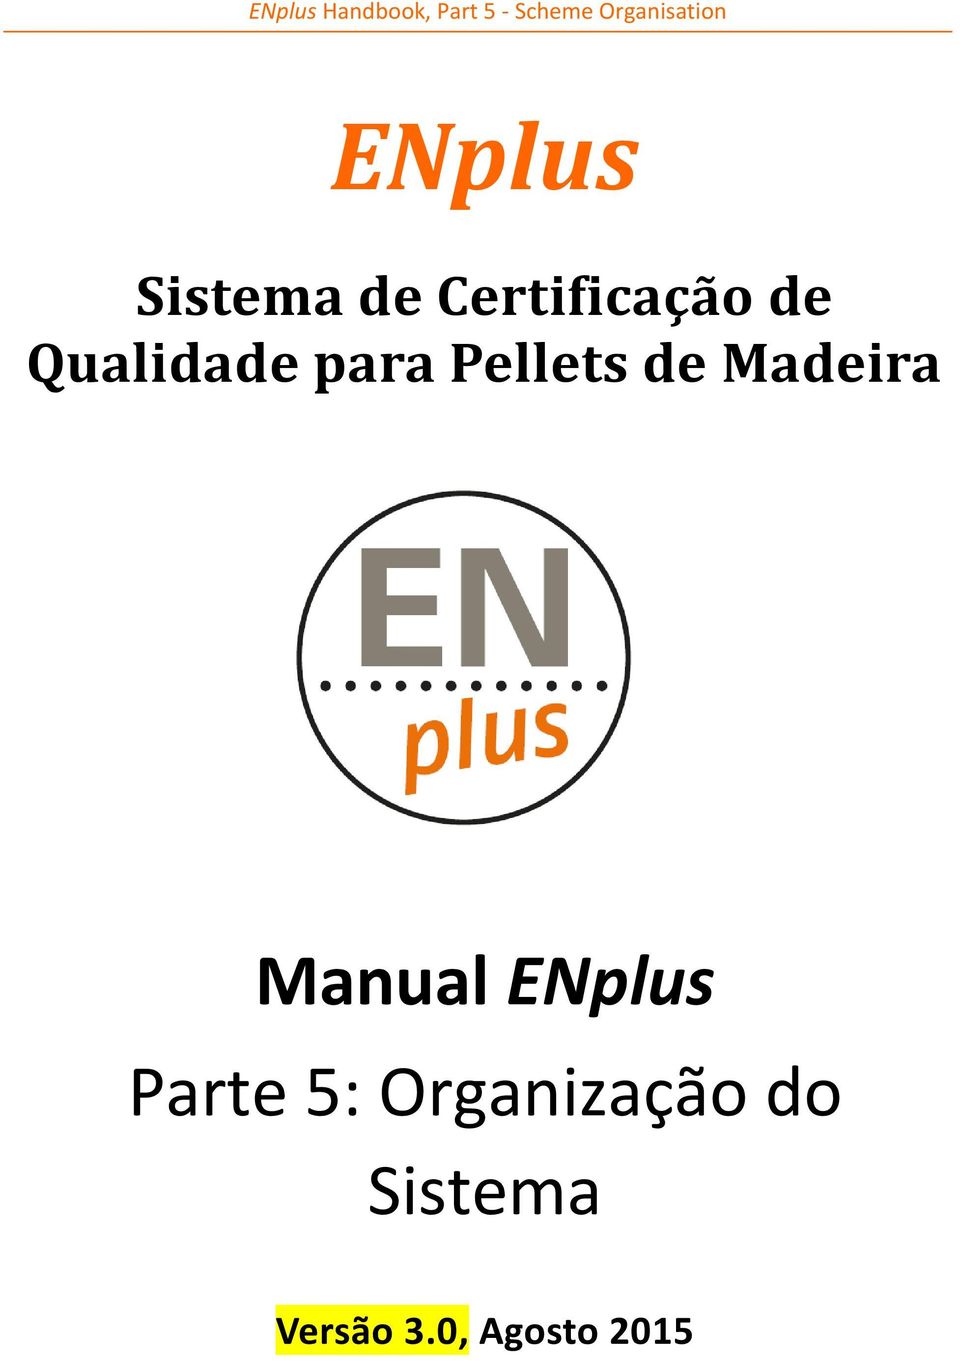 para Pellets de Madeira Manual ENplus Parte